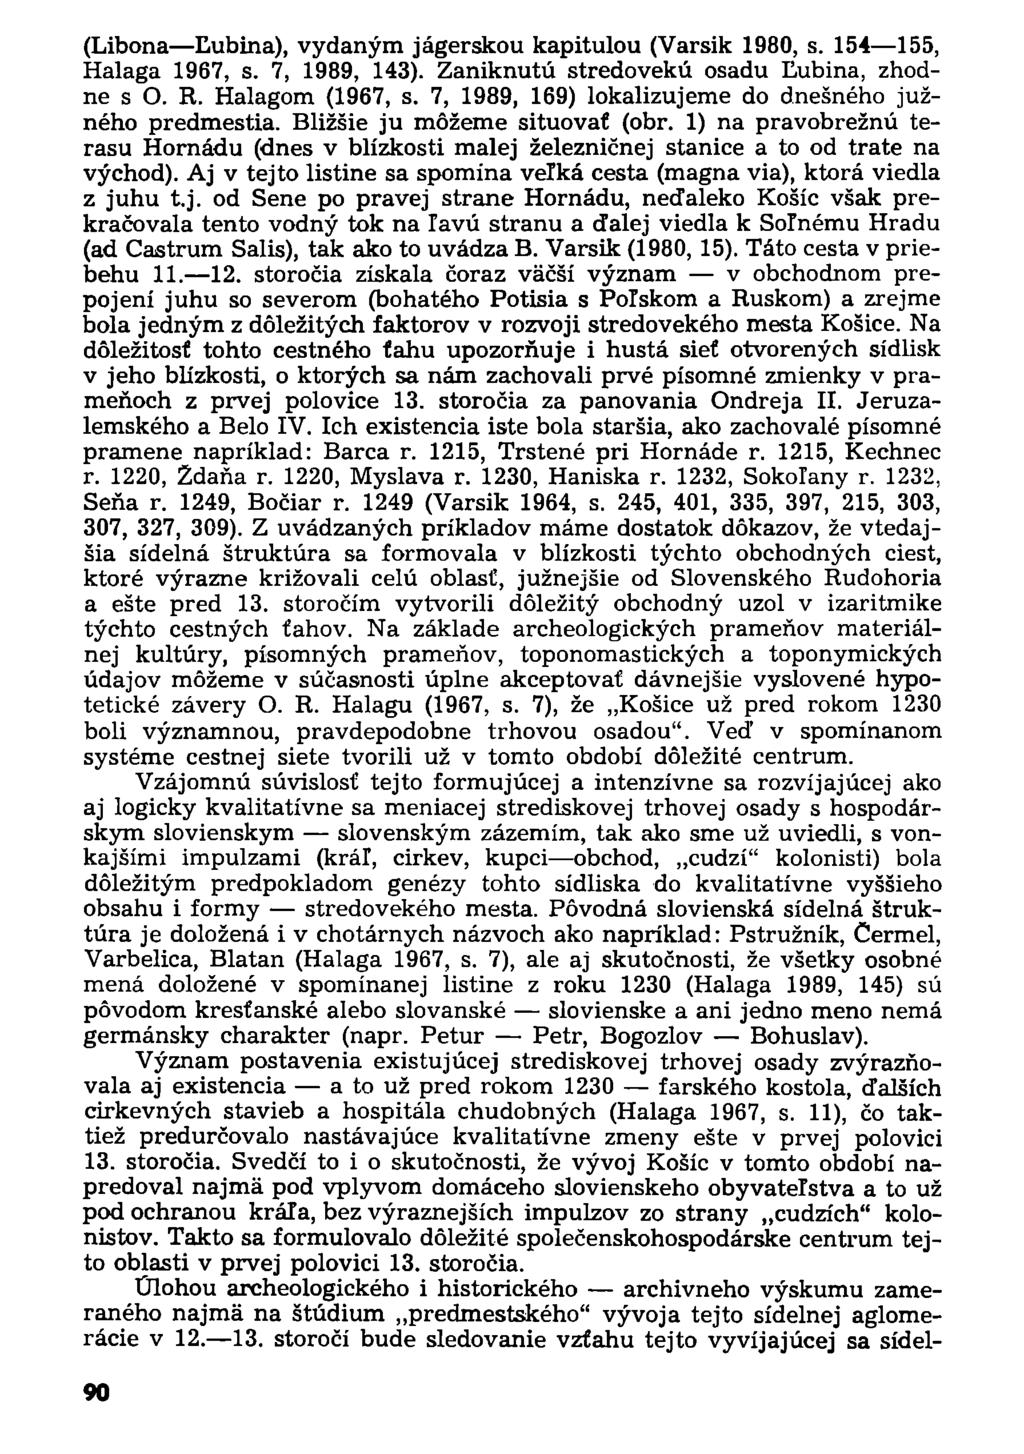 (Libona Eubina), vydanym jägerskou kapitulou (Varsik 1980, s. 154 155, Haiaga 1967, s. 7, 1989, 143). Zaniknutü stredovekü osadu Eubina, zhodne s O. R. Halagom (1967, s.